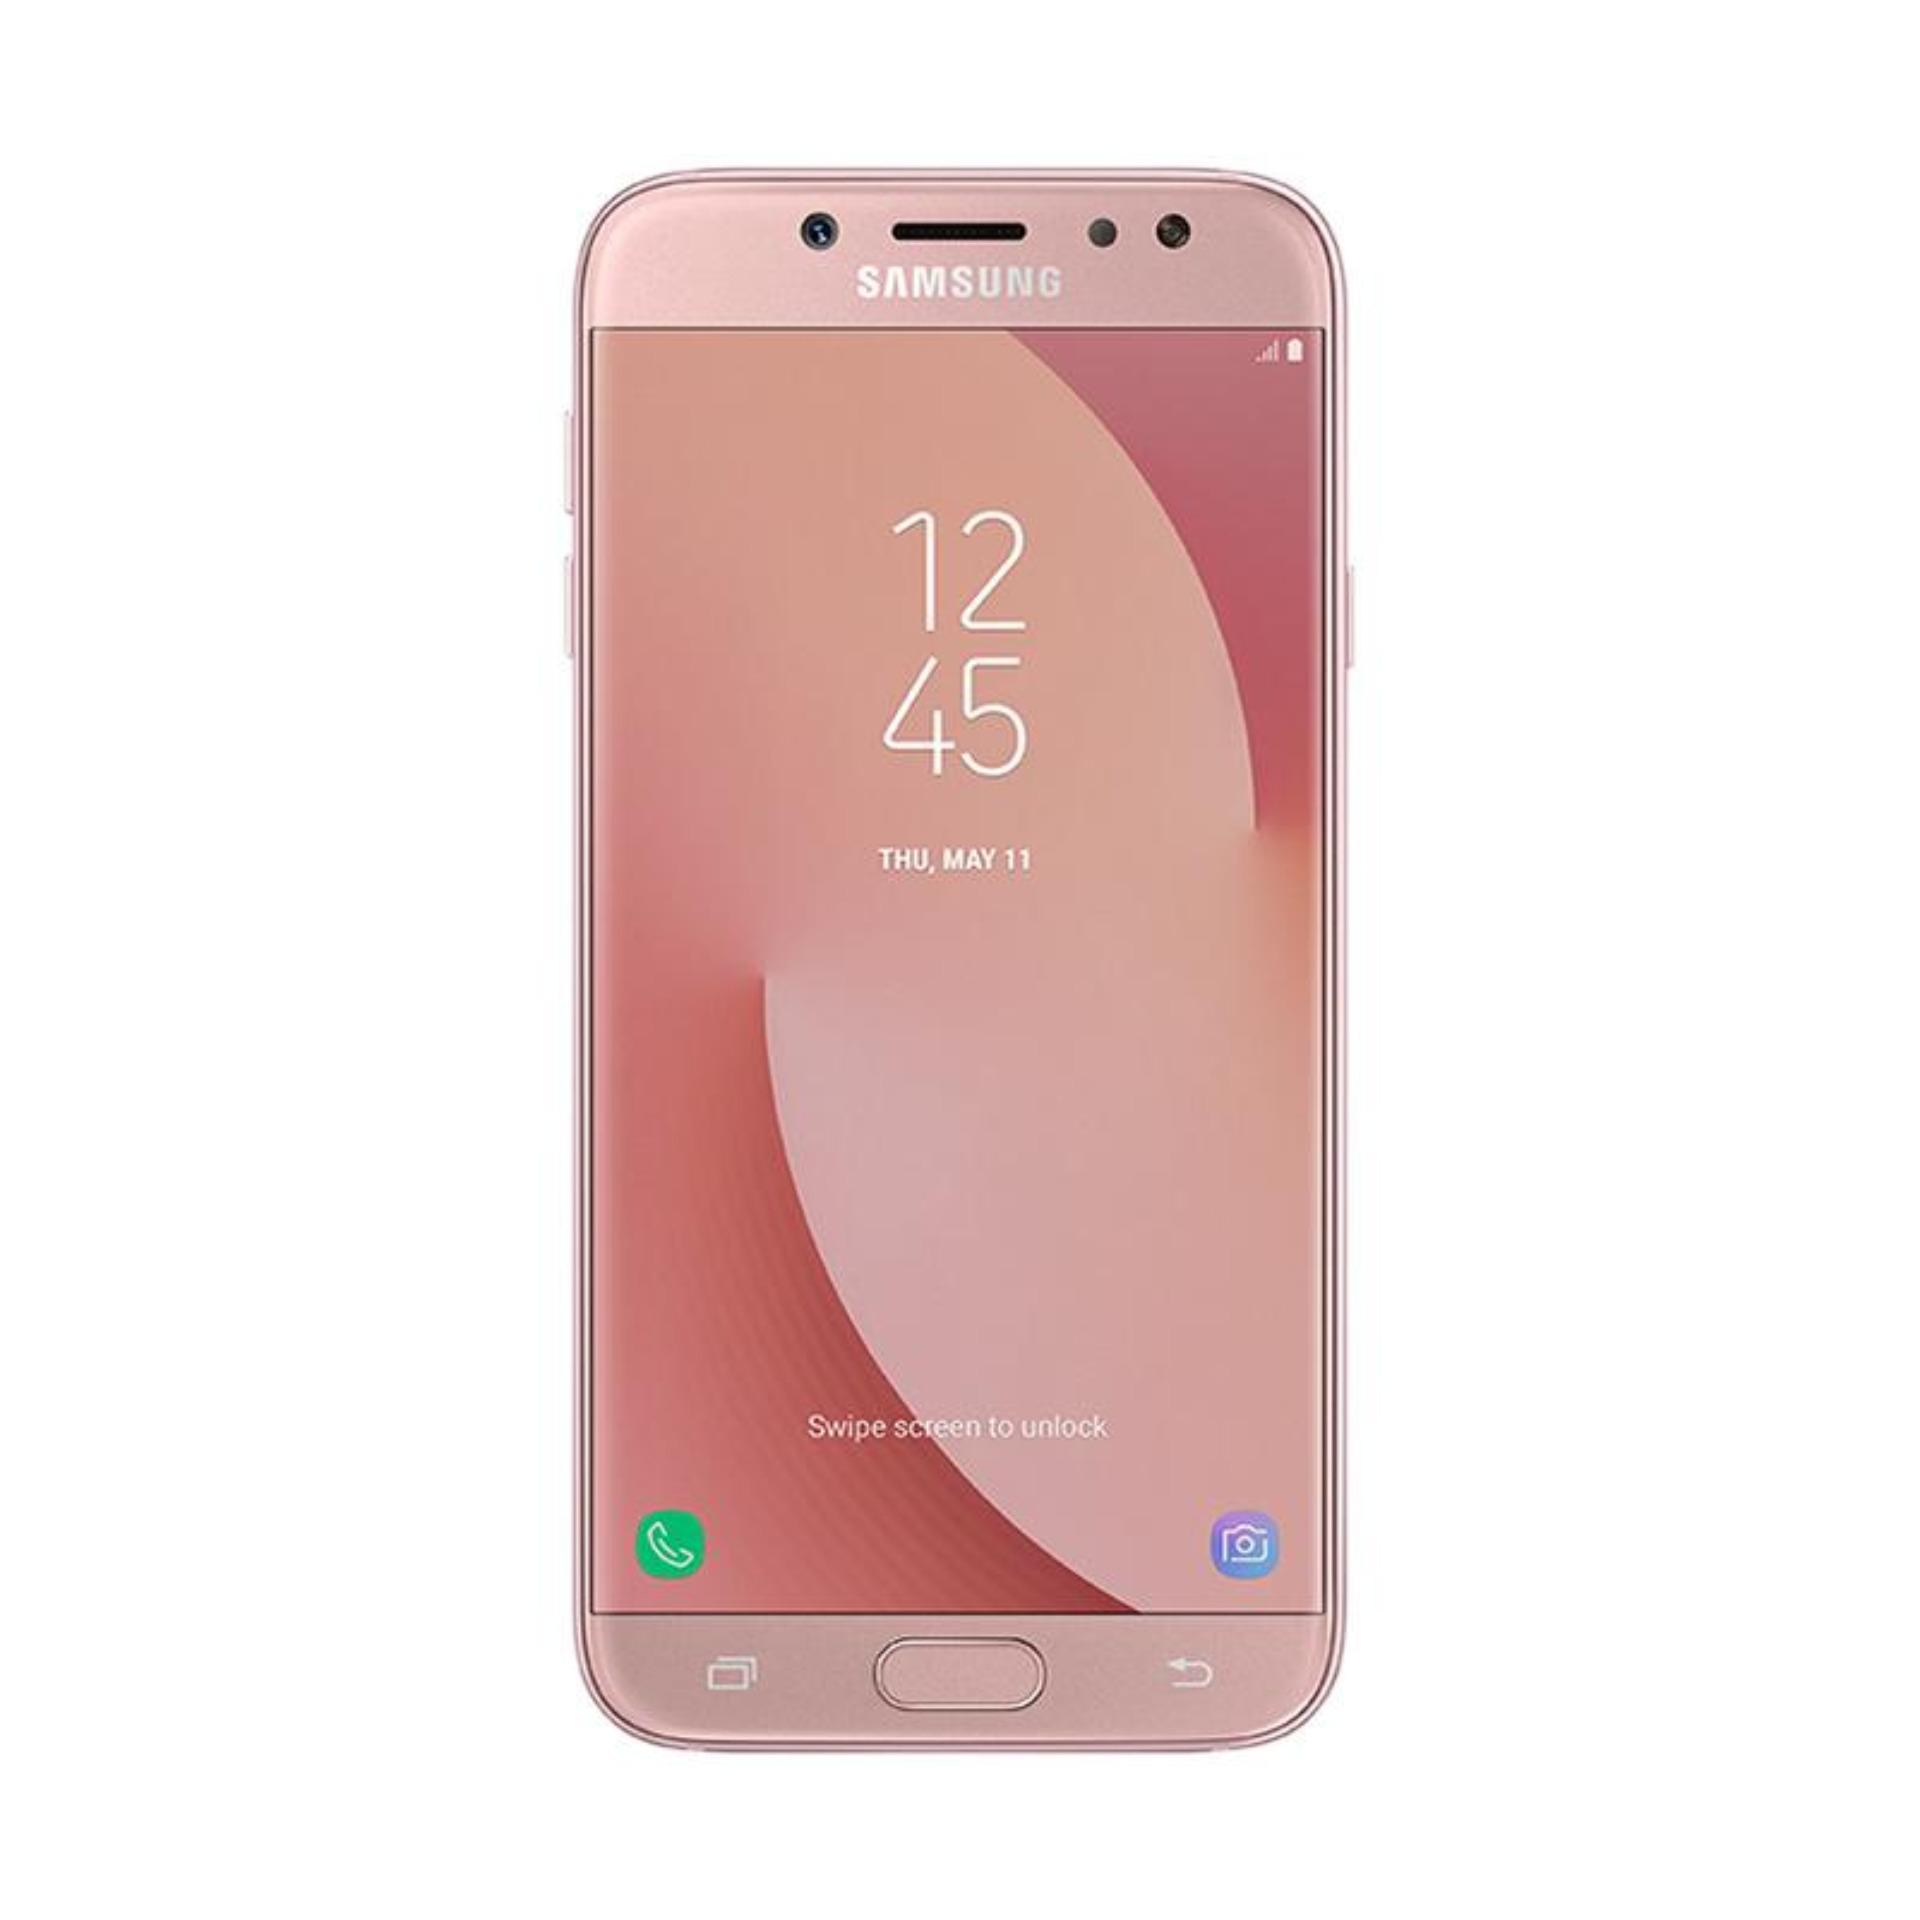  Samsung Galaxy J7 Pro Smartphone - Pink [32 GB/ 3 GB]